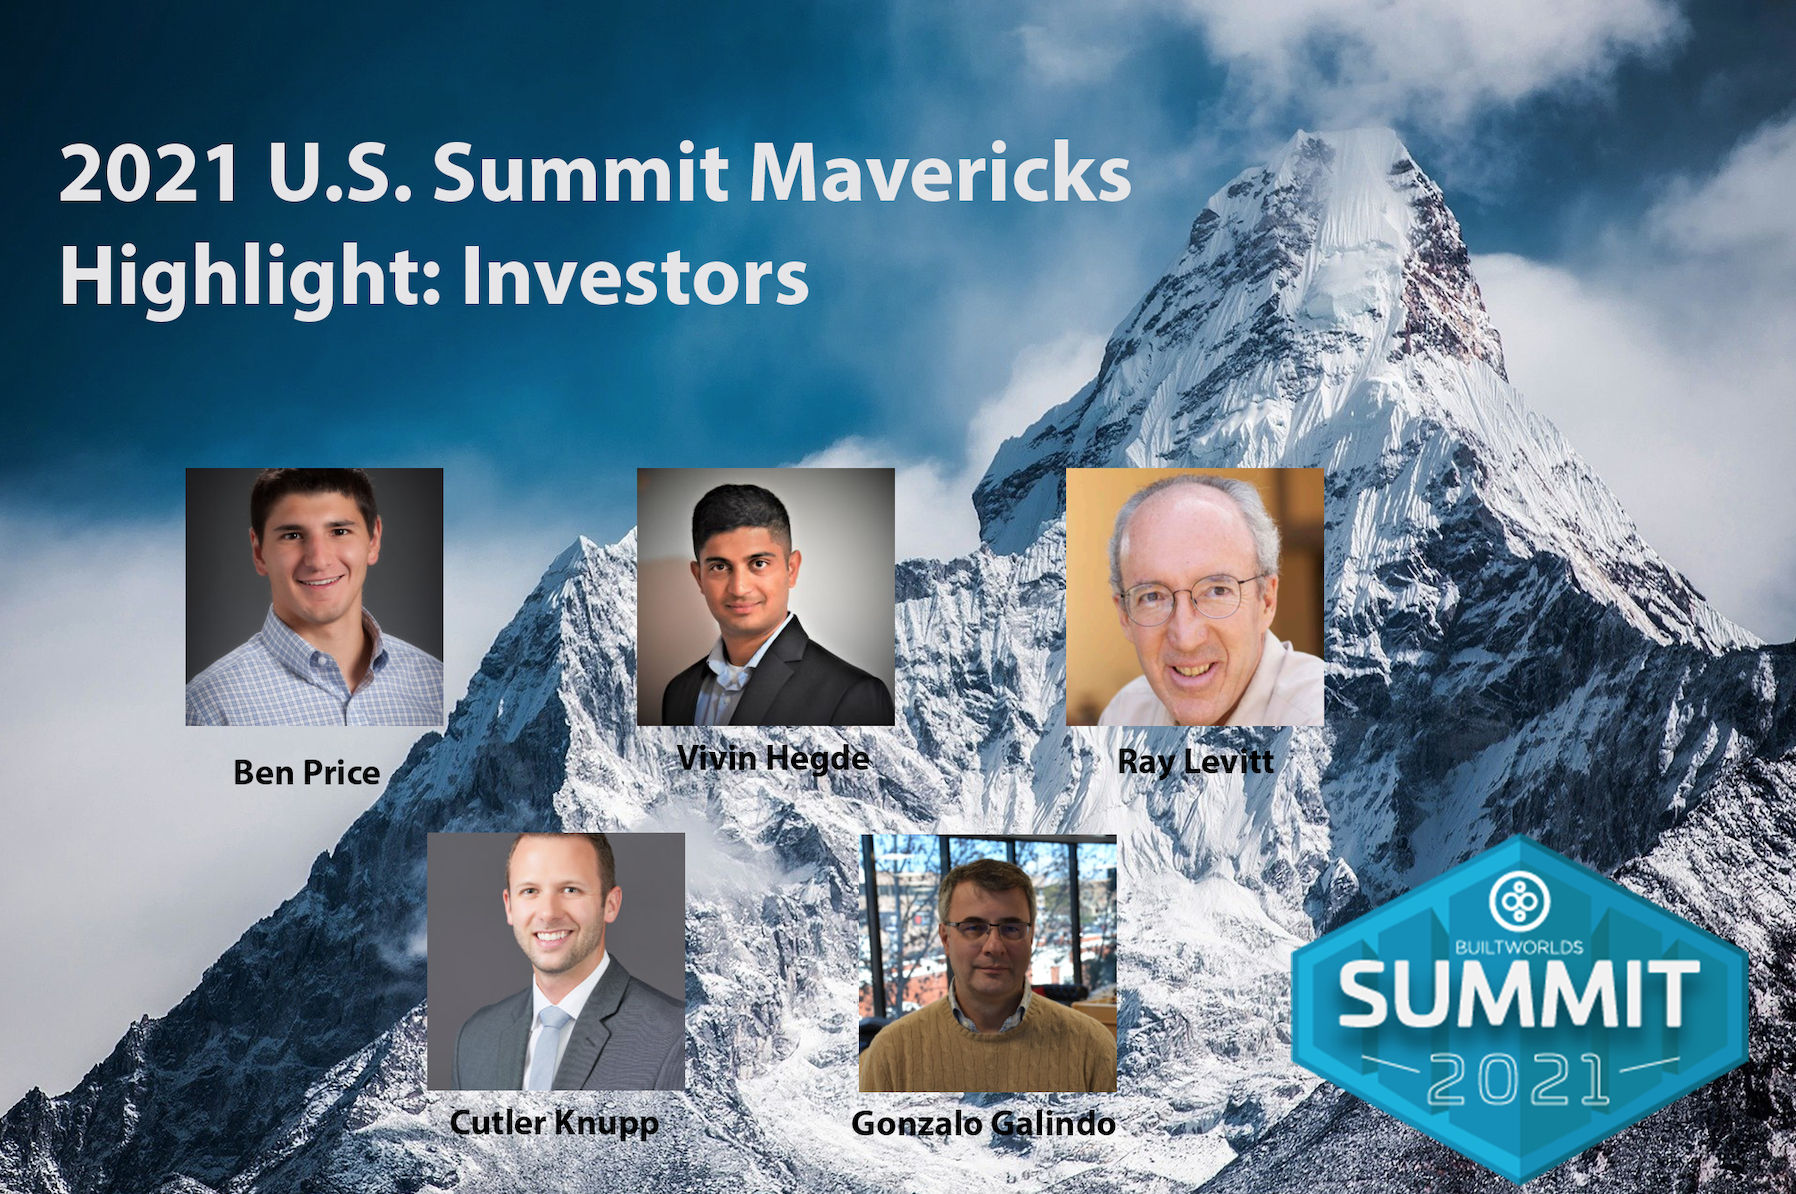 2021 U.S. Summit Mavericks Highlight Investors